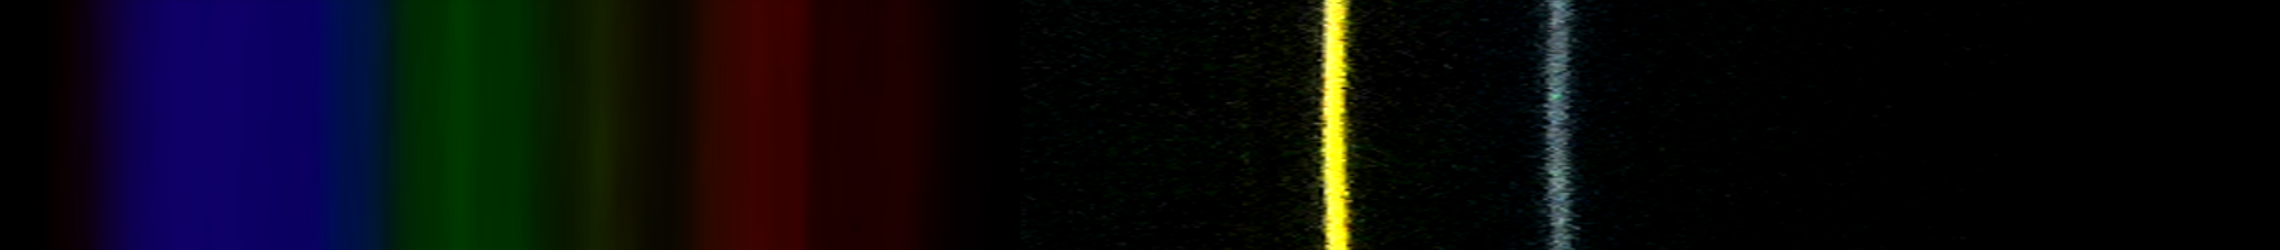 Photograph of emission spectrum of Oxygen.